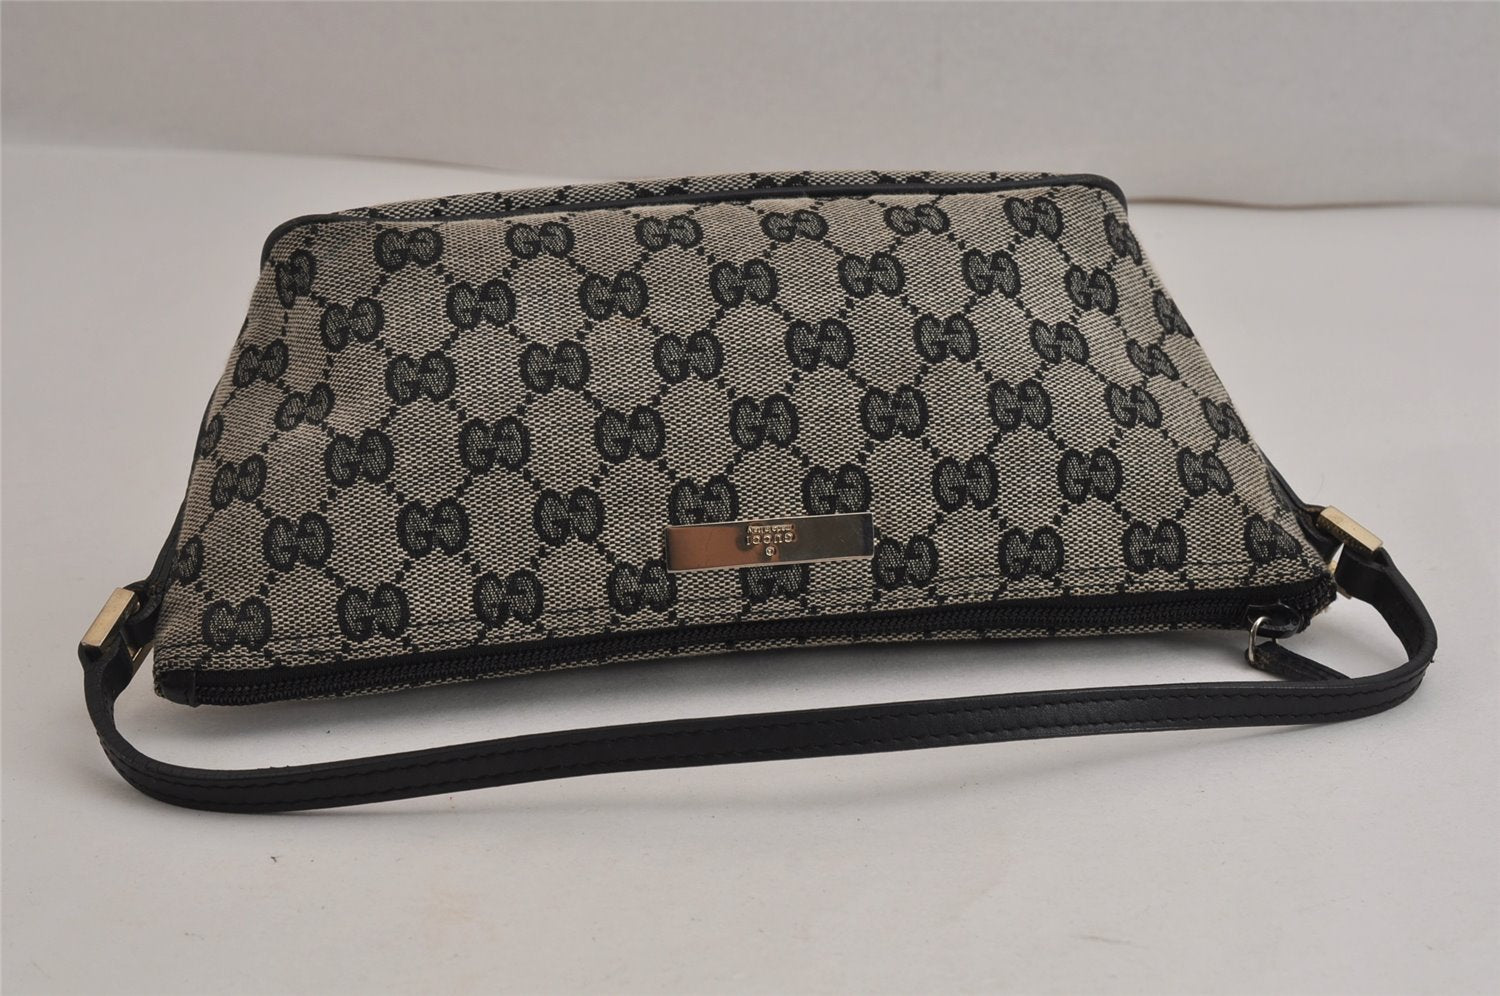 Authentic GUCCI Hand Bag Pouch Purse GG Canvas Leather 0391103 Black 9941J